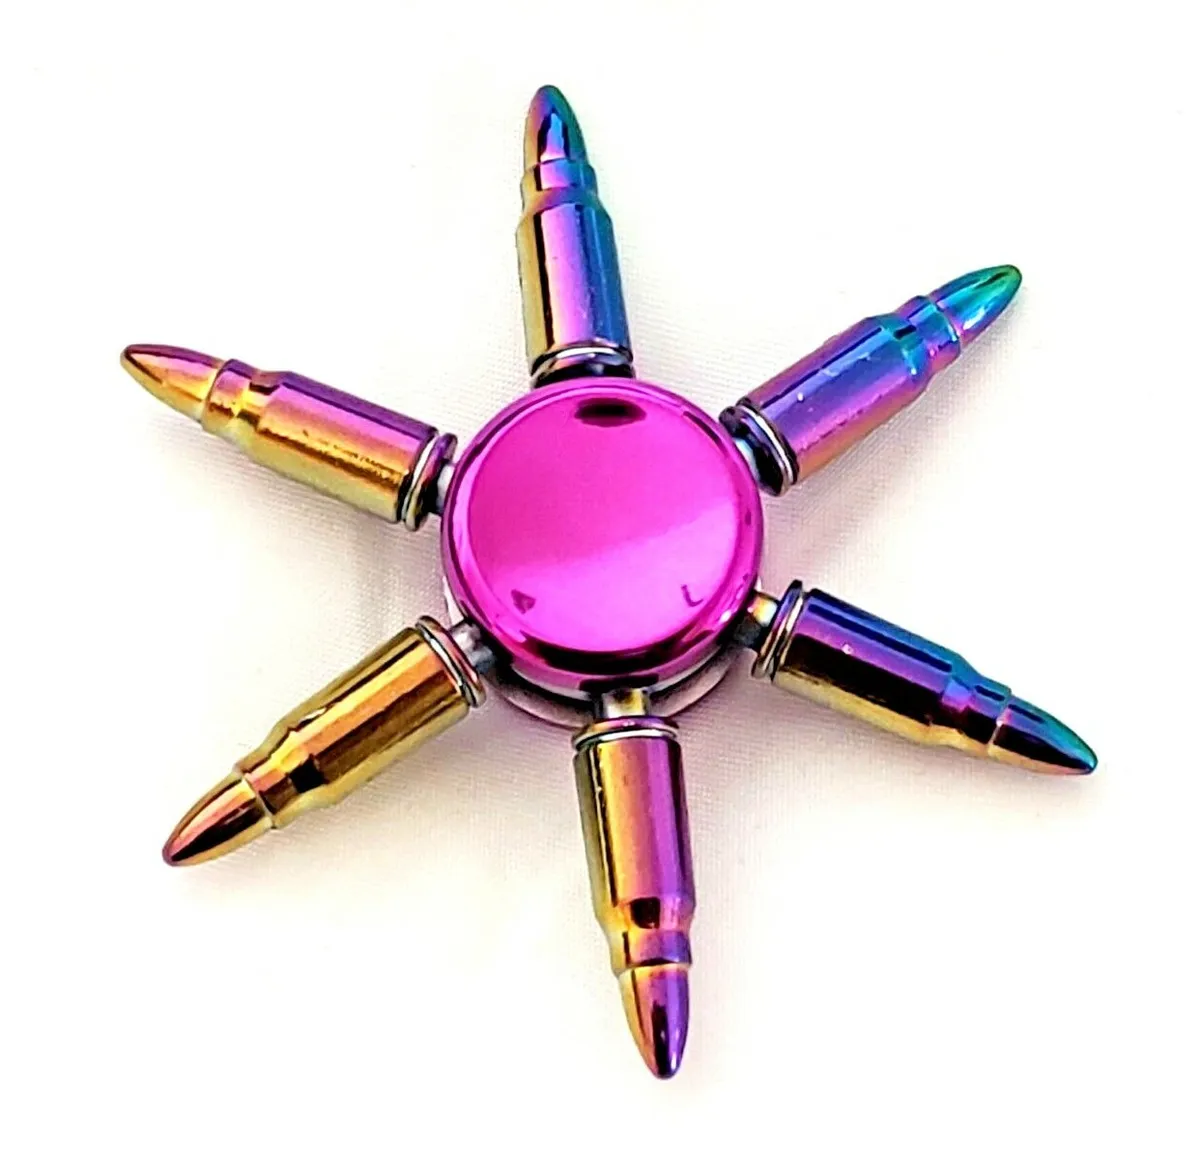 Rainbow Bullets Metal Fidget Spinner Toy Boys Girls Kids Adults ADHD Focus